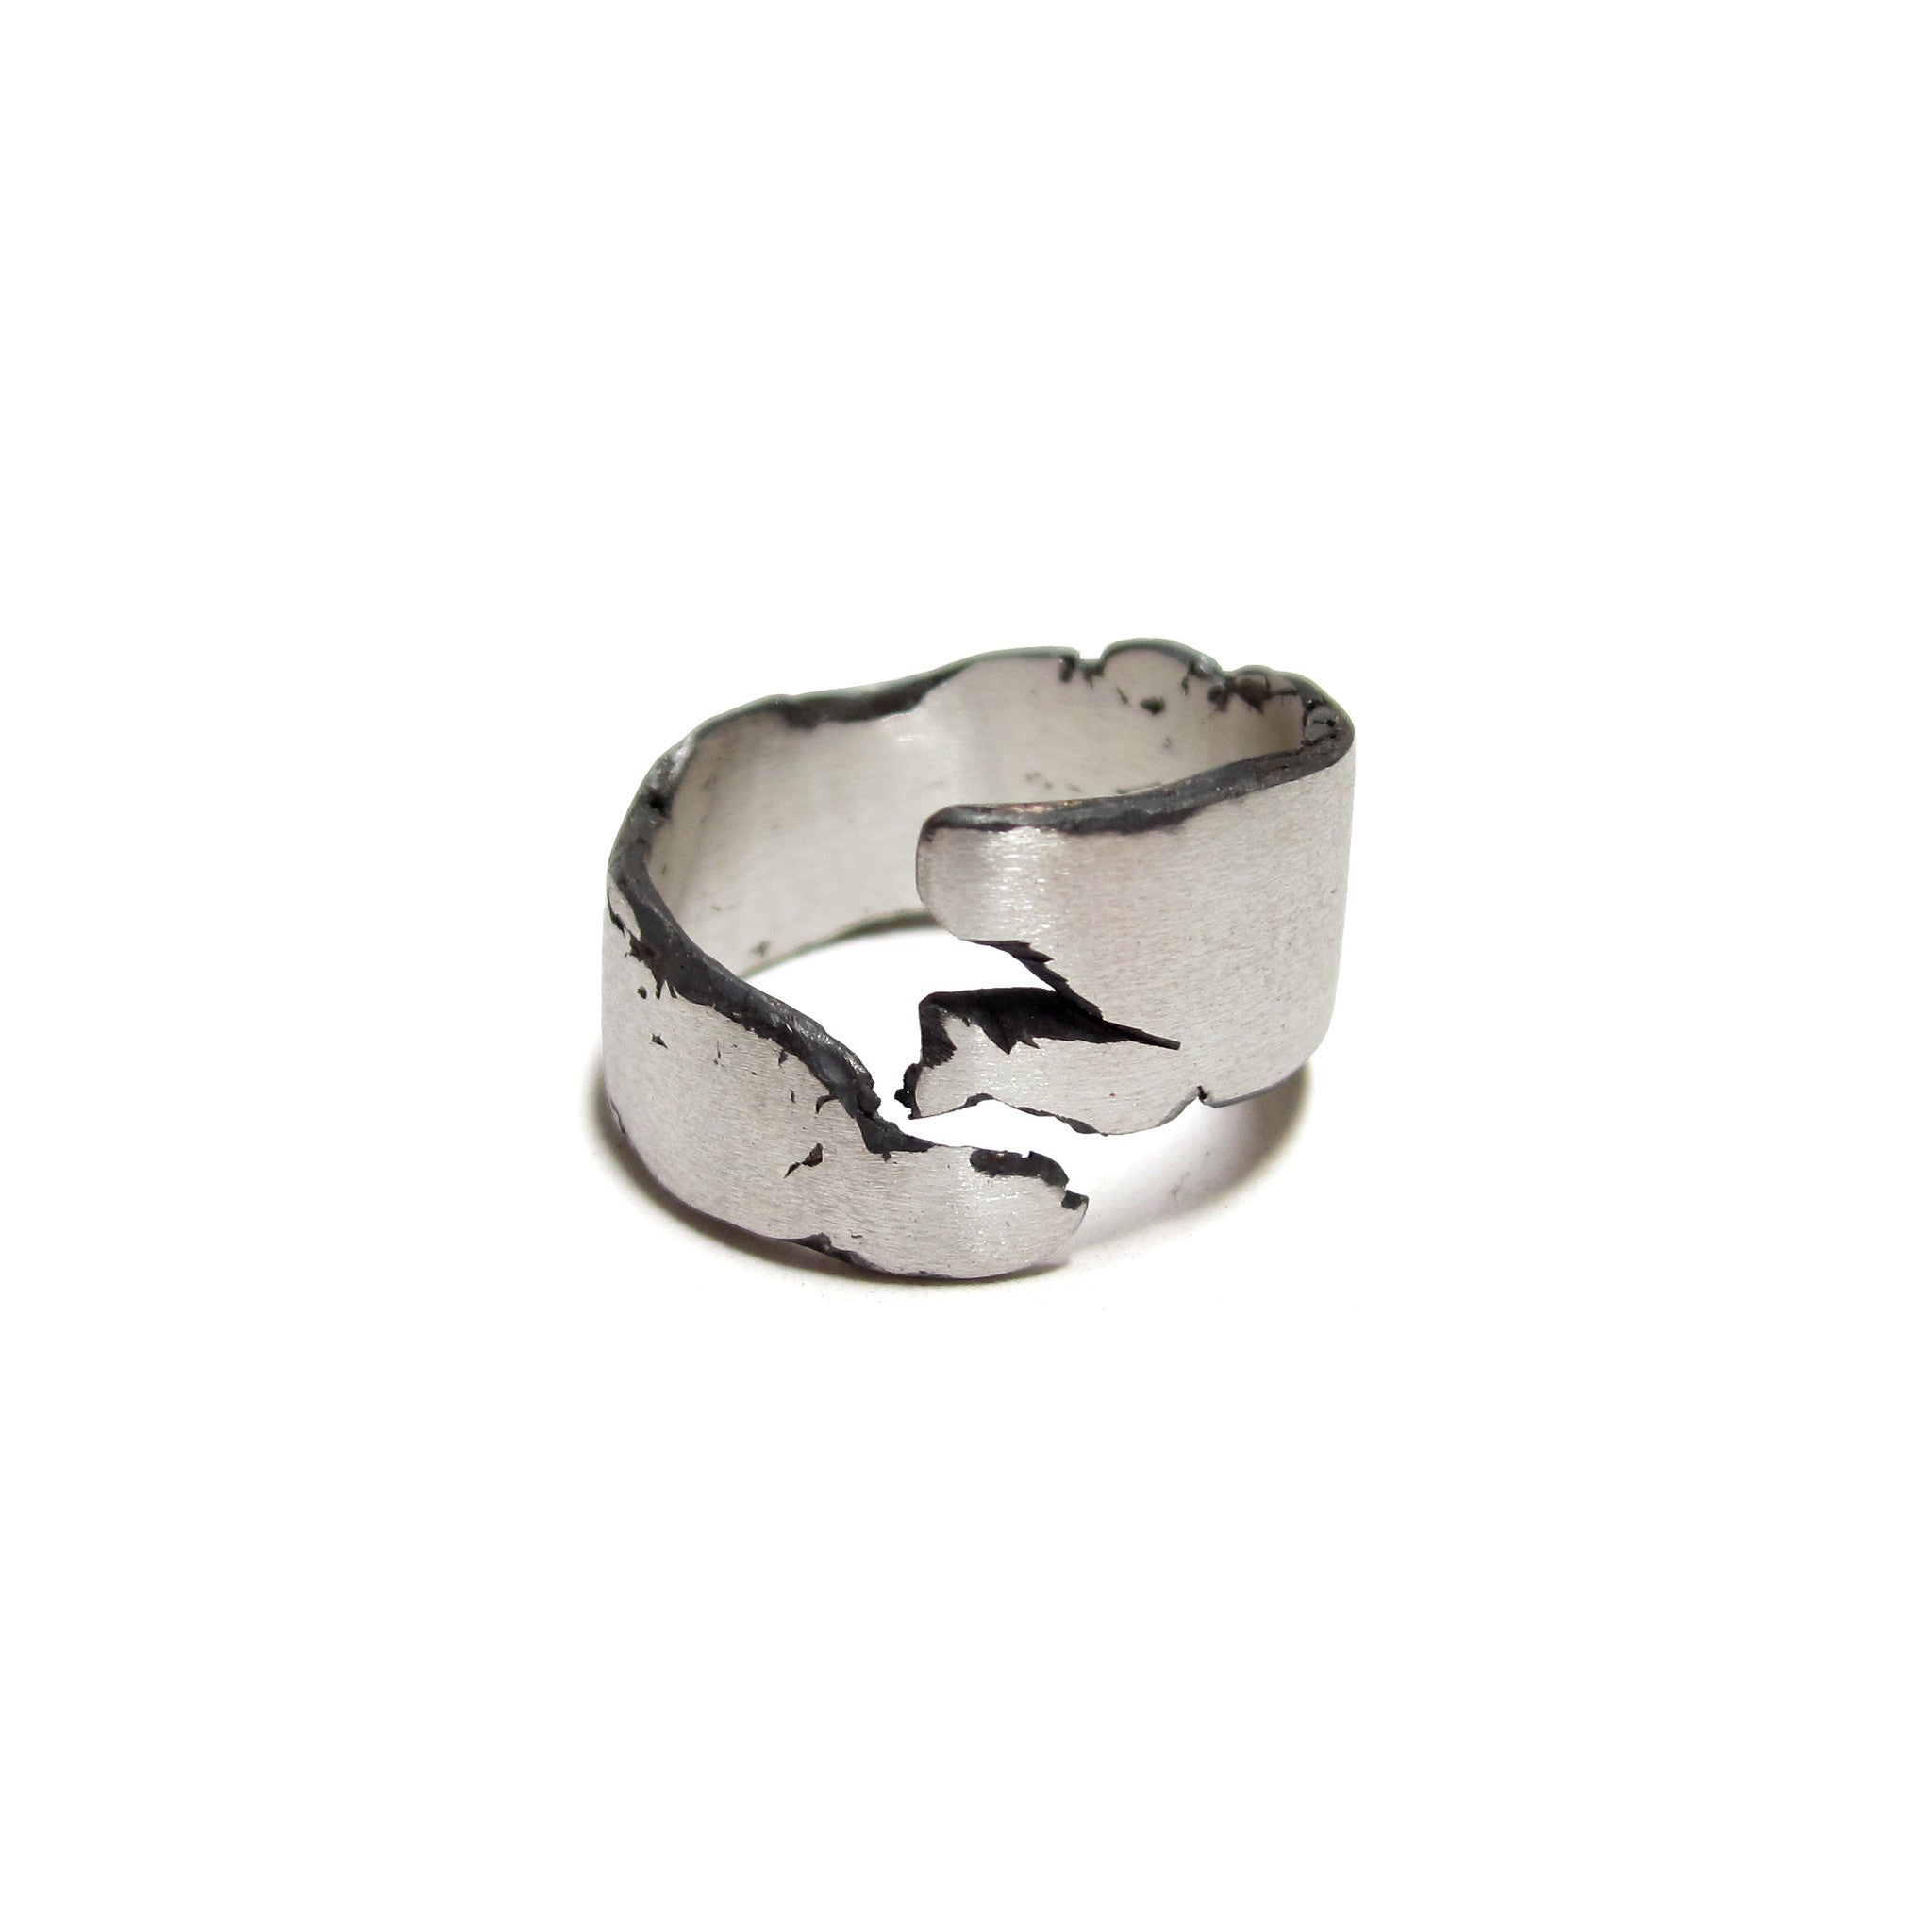 Cracked ring - size 8